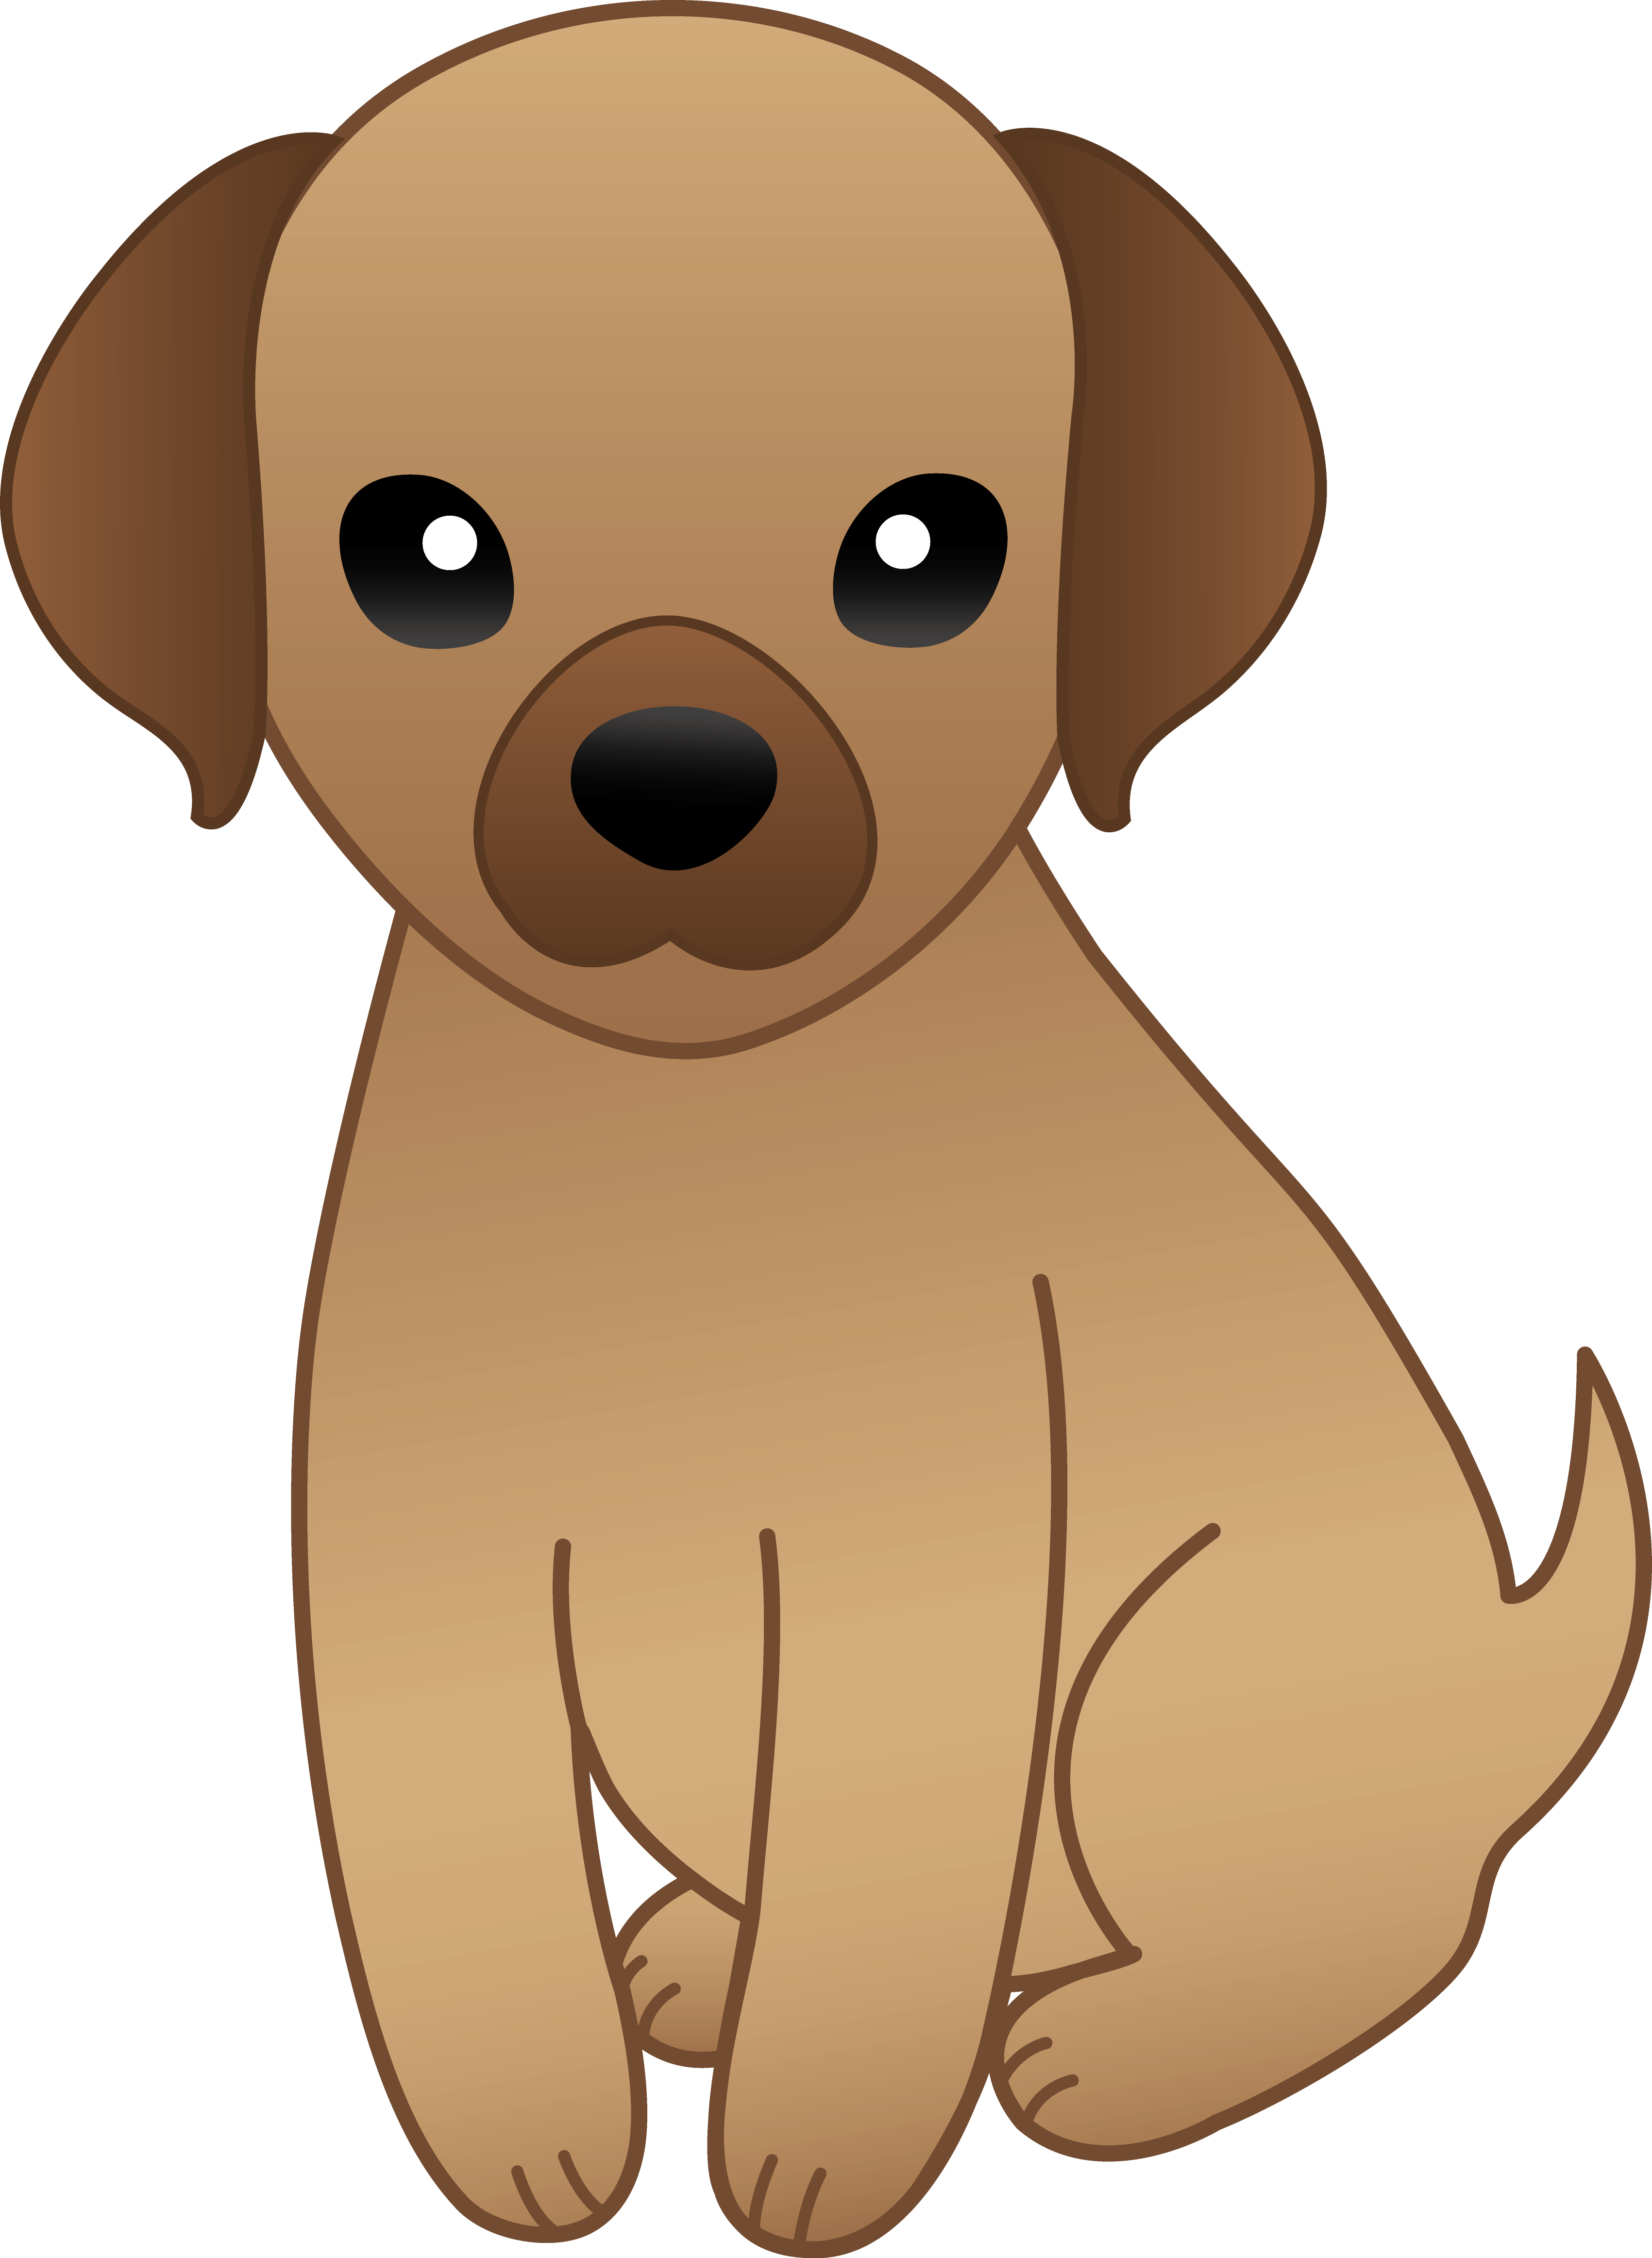 Free Pets Cartoon Cliparts Download Free Pets Cartoon Cliparts Png